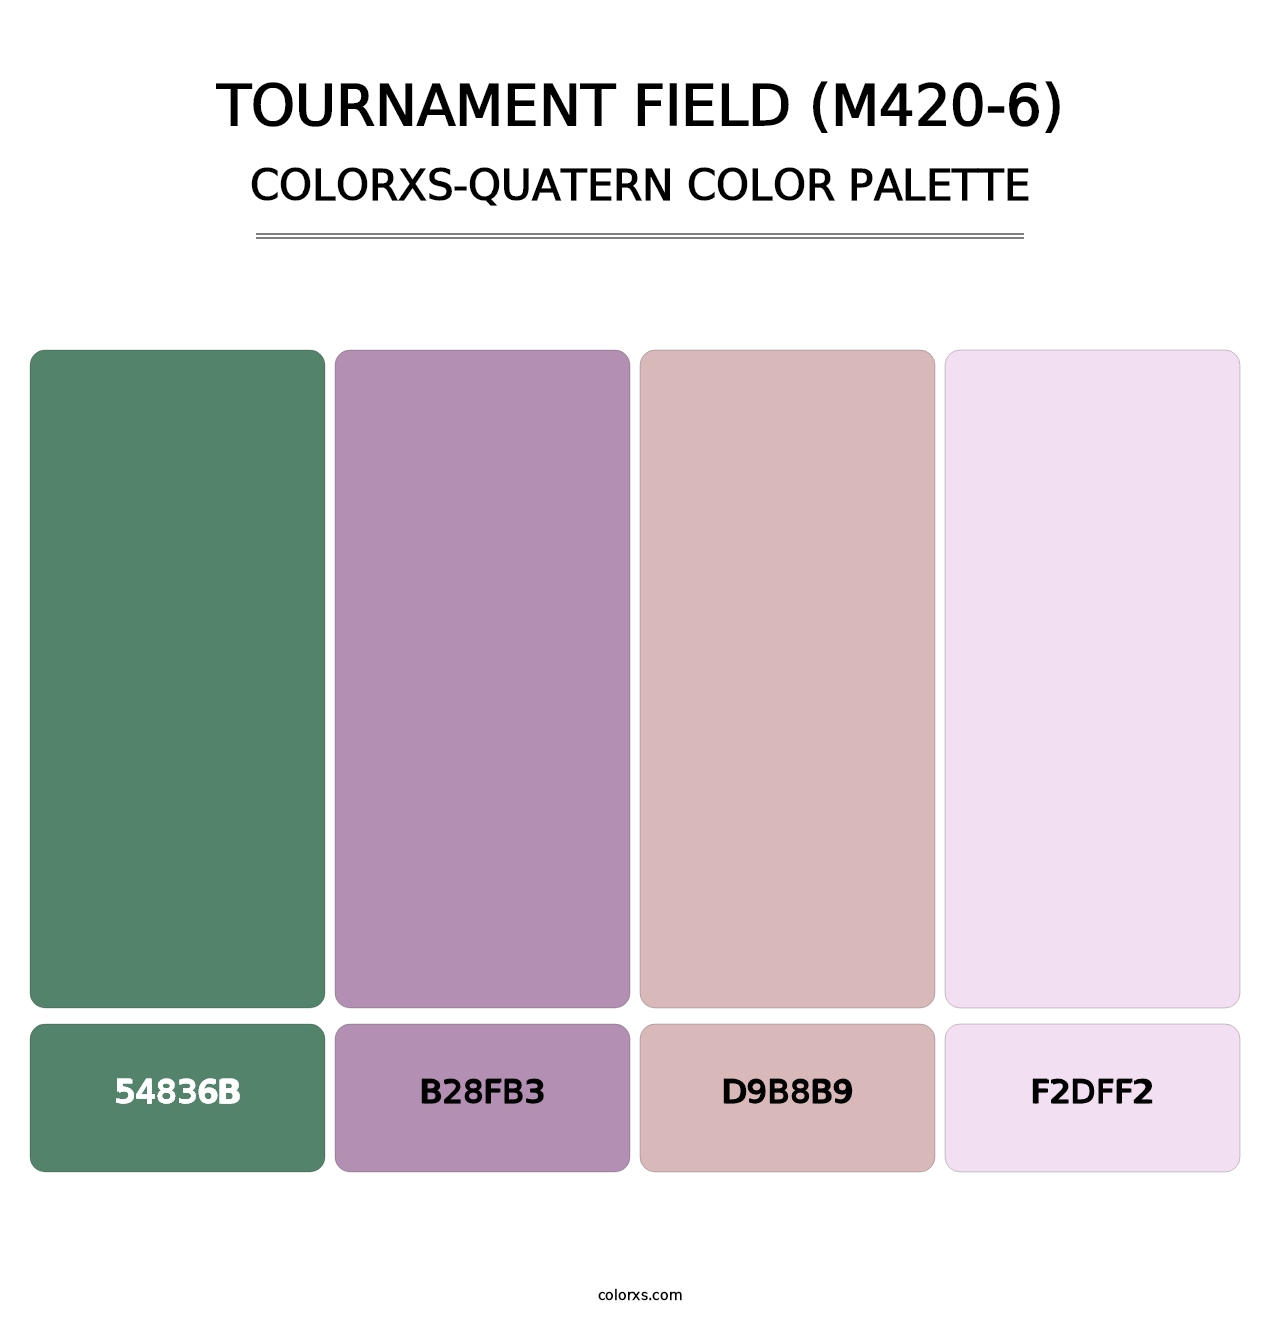 Tournament Field (M420-6) - Colorxs Quatern Palette